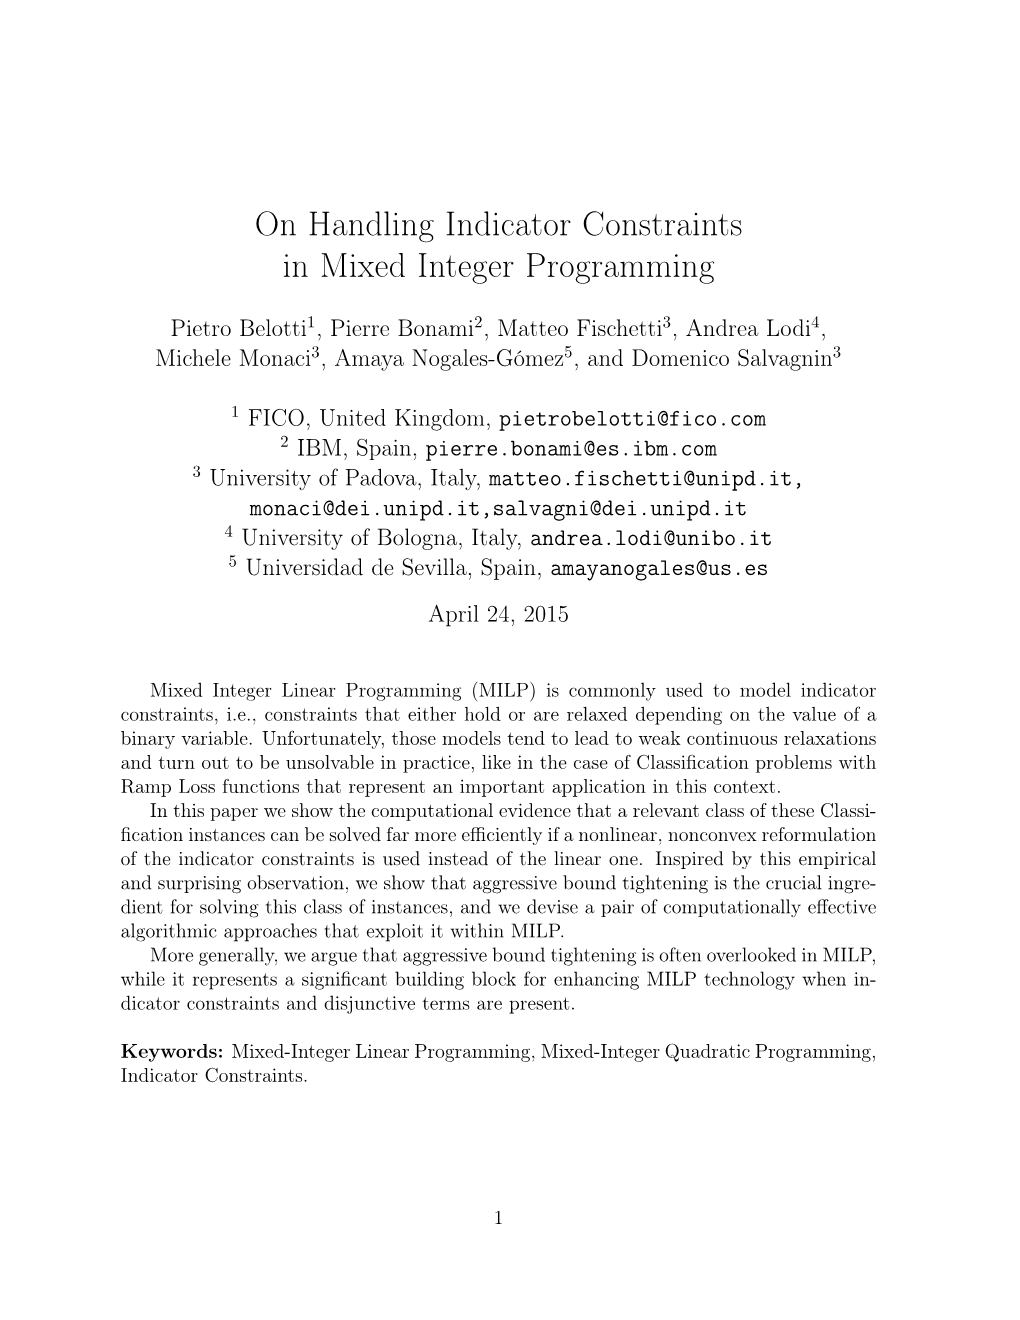 On Handling Indicator Constraints in Mixed Integer Programming